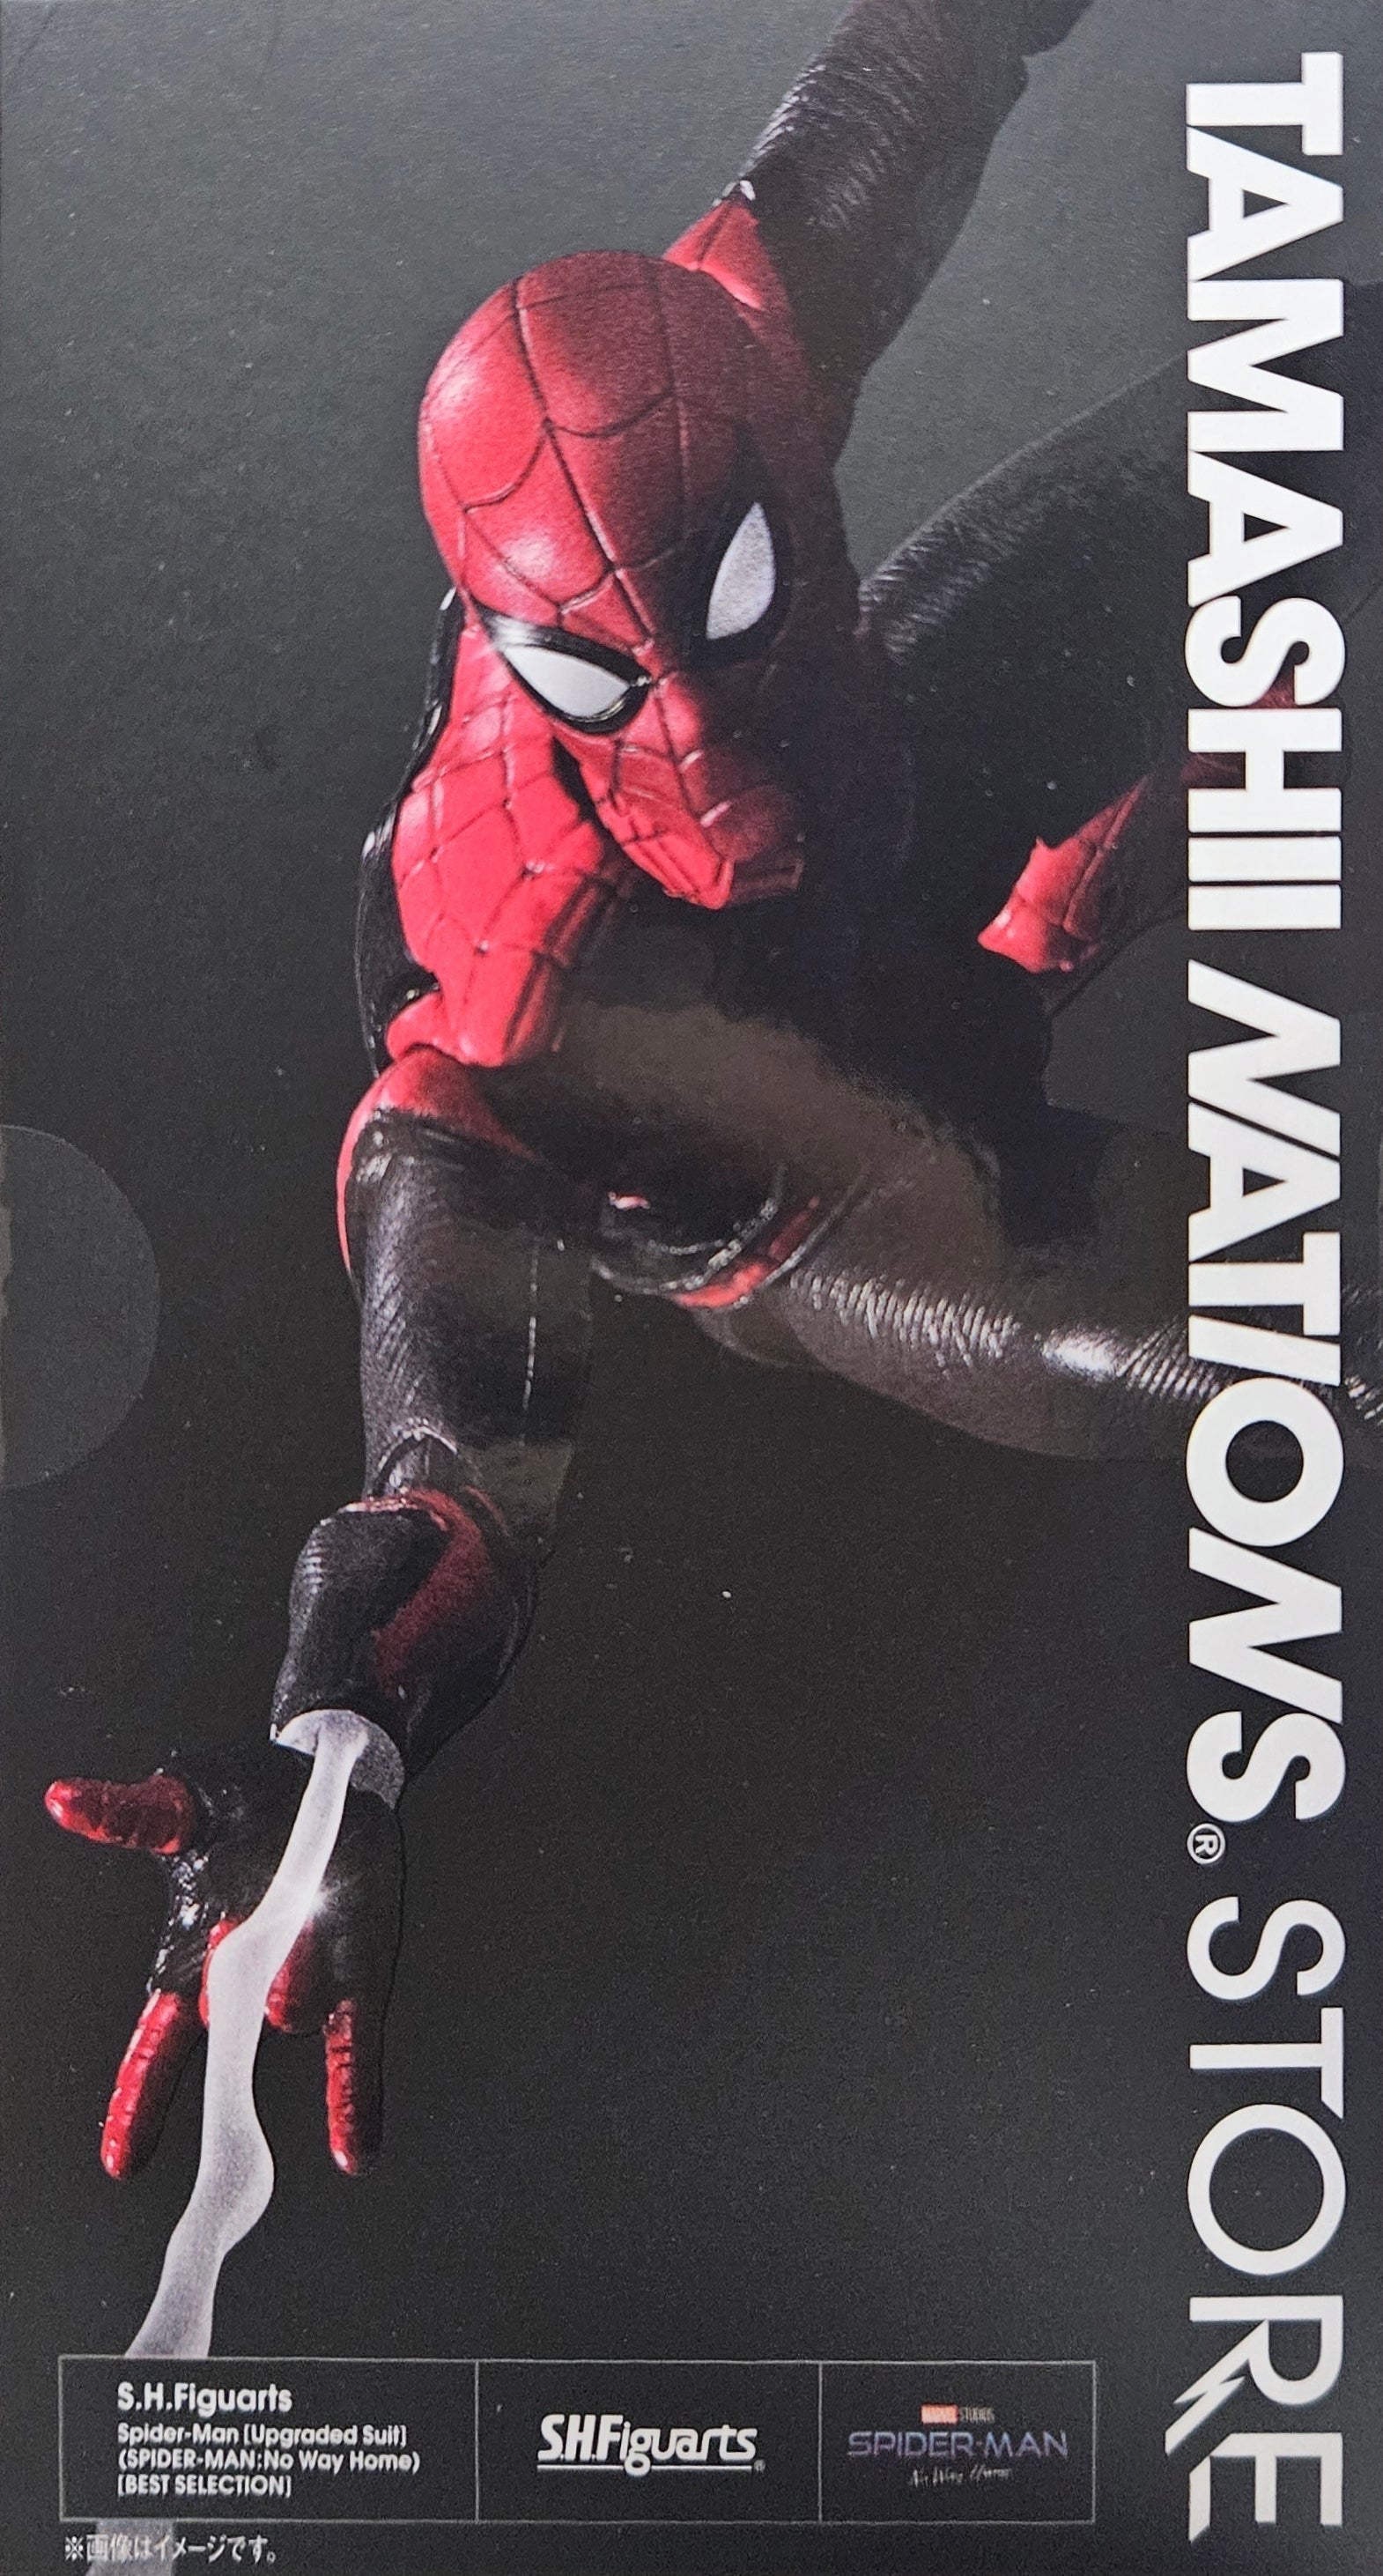 S.H.Figuarts Spider-Man Upgraded Suit (SPIDER-MAN: No Way Home